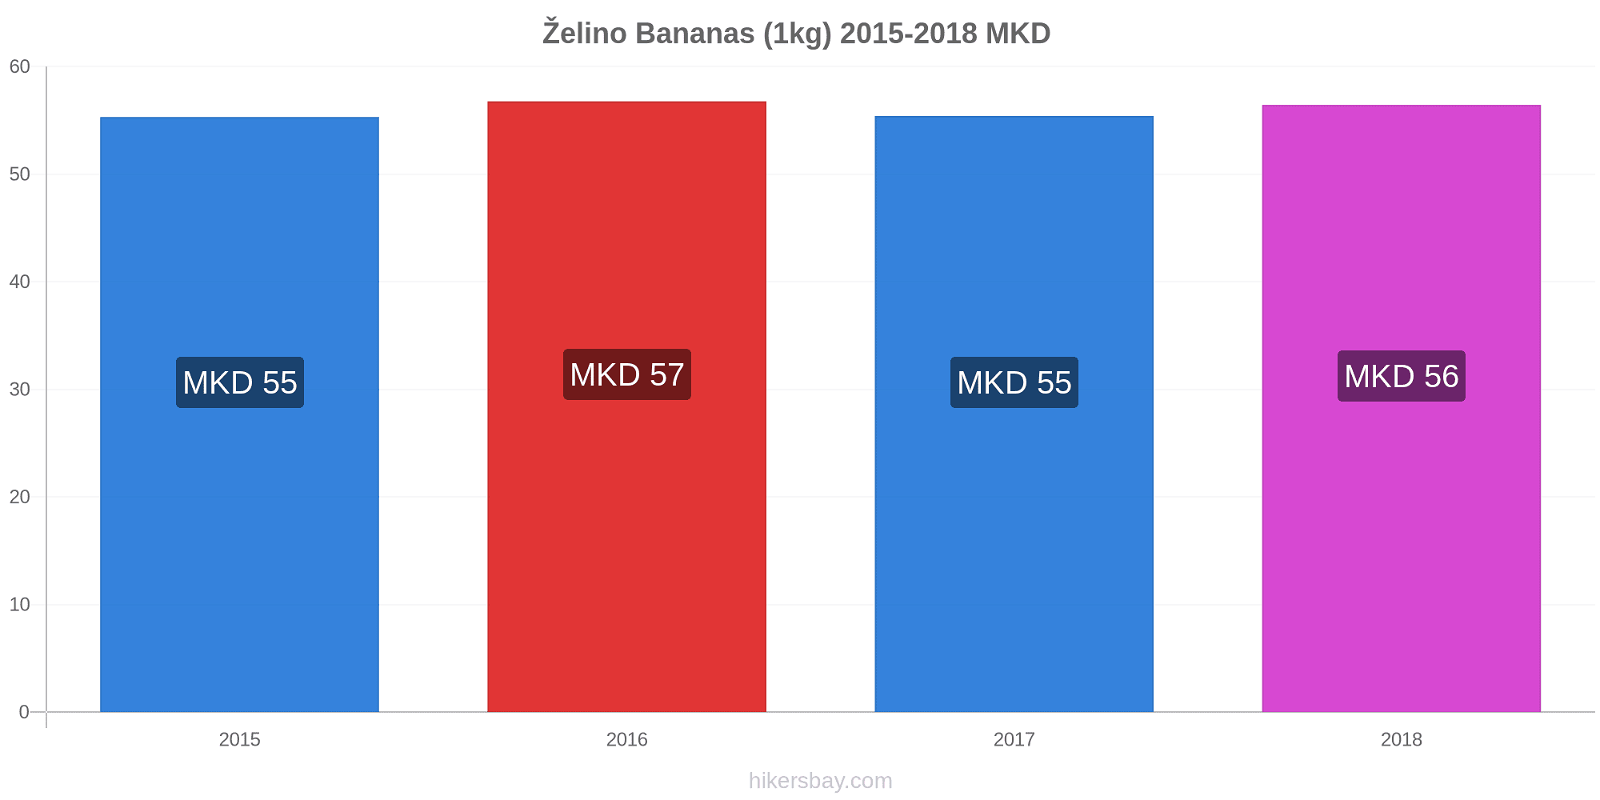 Želino price changes Bananas (1kg) hikersbay.com